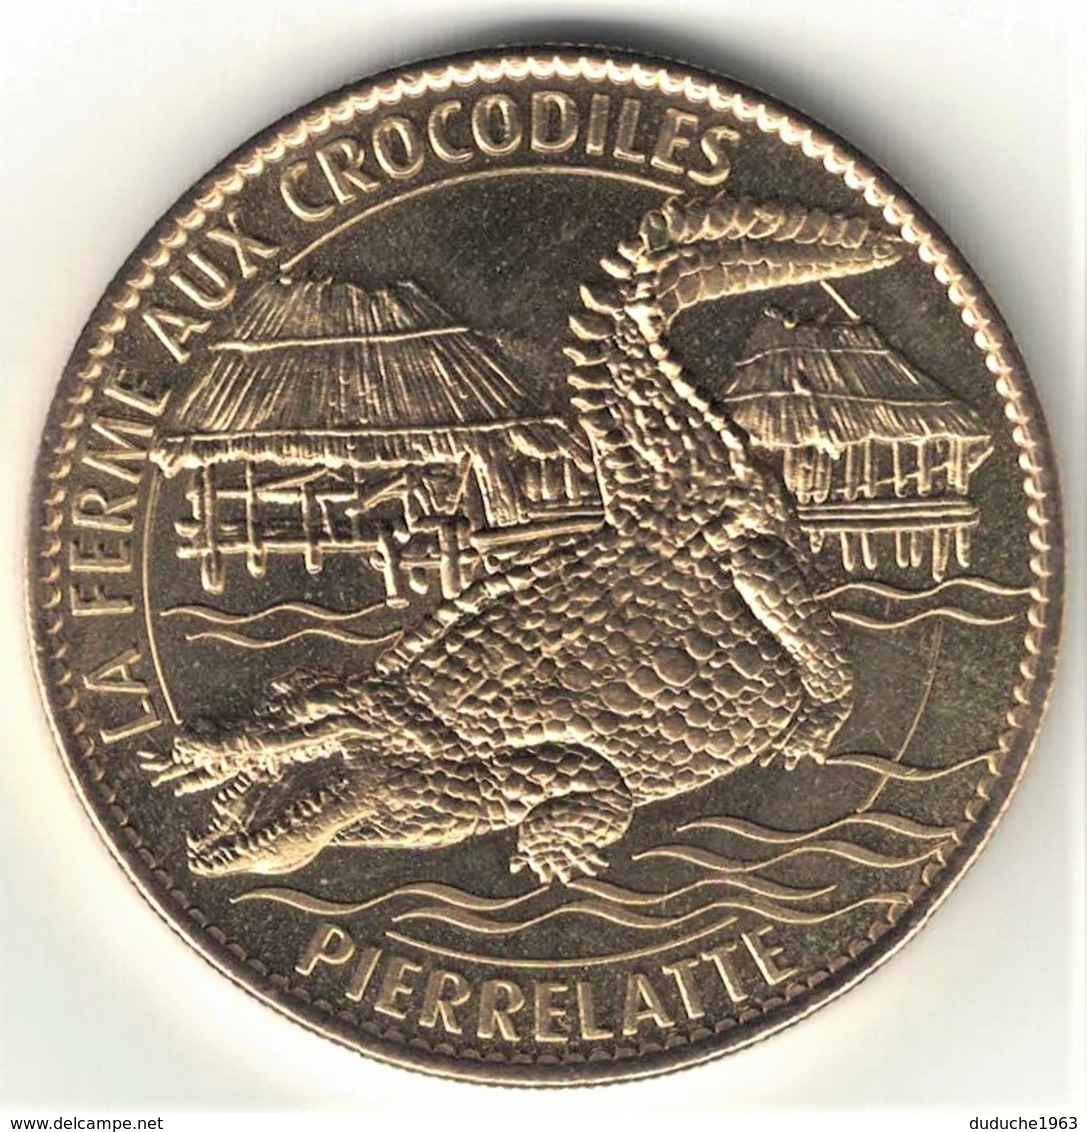 Medaille Arthus Bertrand 26.Pierrelatte - Ferme Des Crocodiles 2. 2009 - 2009